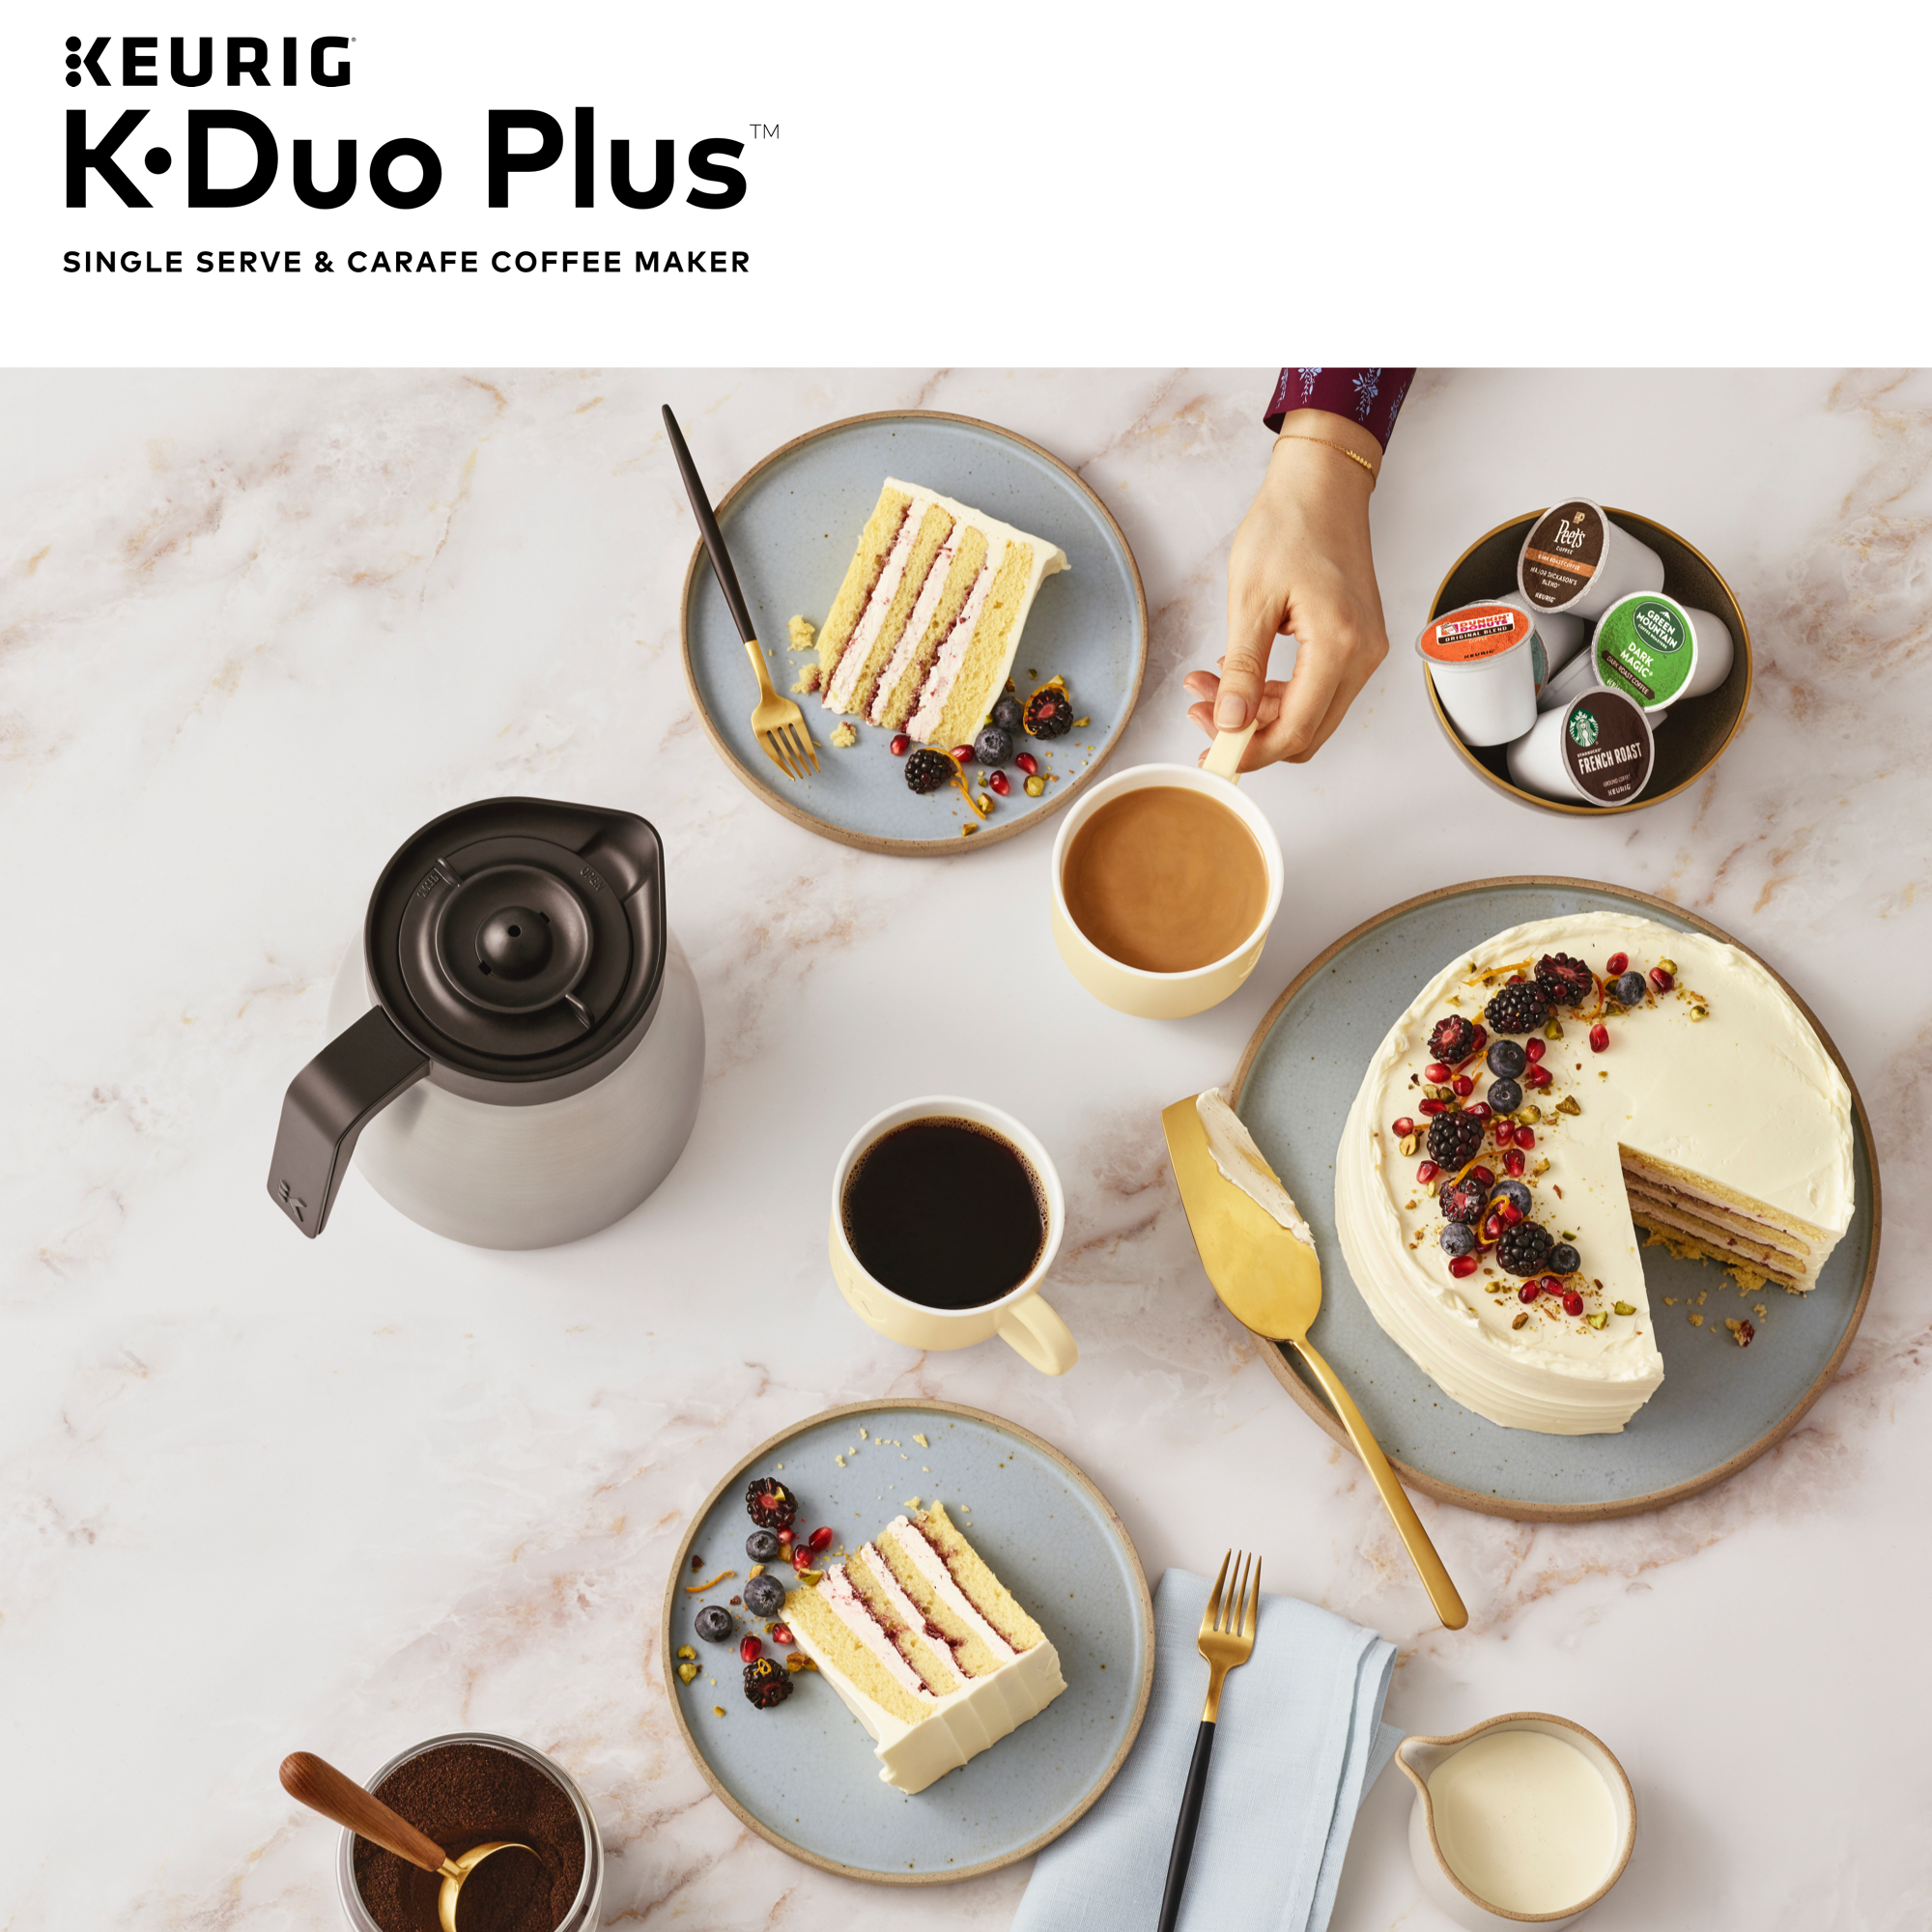 Keurig K-Duo Plus Single Serve & Carafe Coffee Maker - image 5 of 25